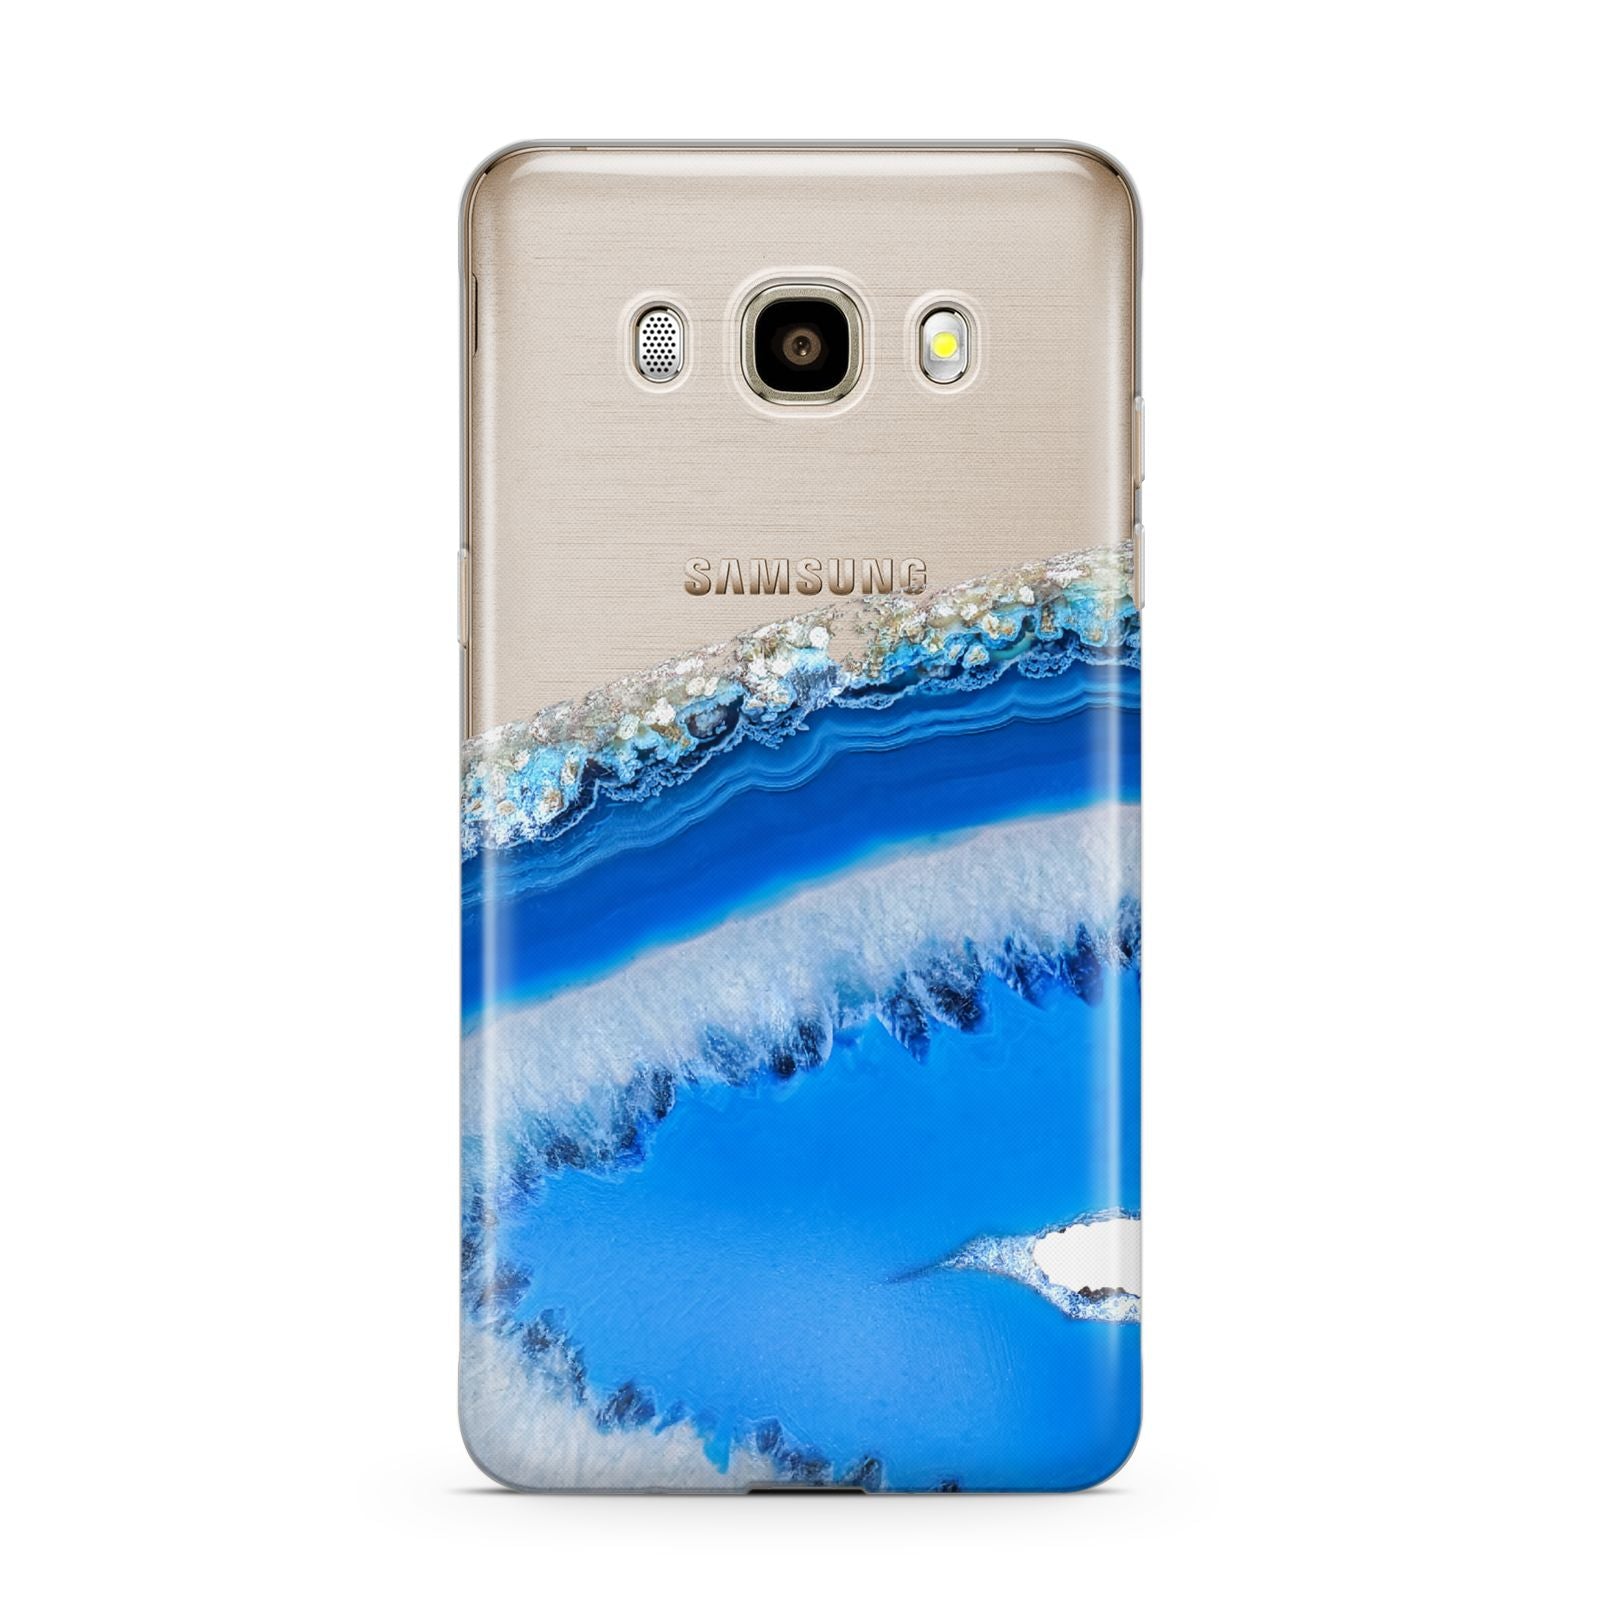 Agate Blue Samsung Galaxy J7 2016 Case on gold phone